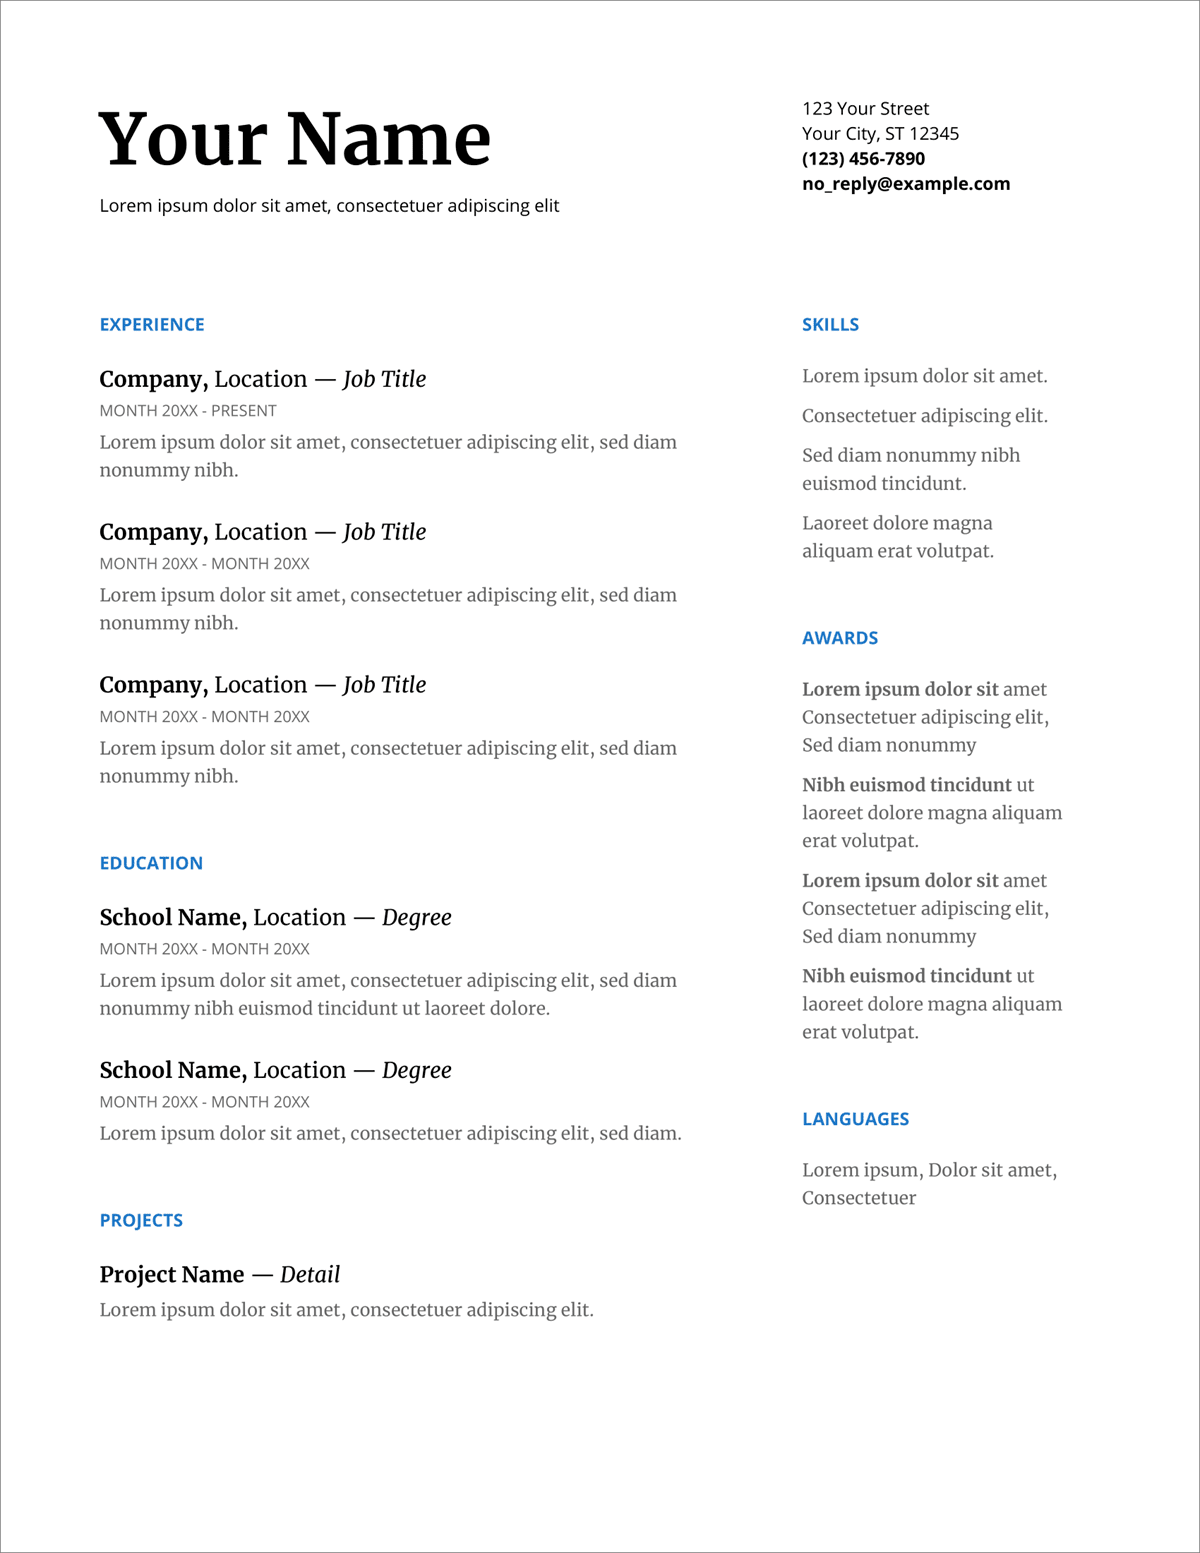 resume-templates-google-docs-reddit-12-templates-example